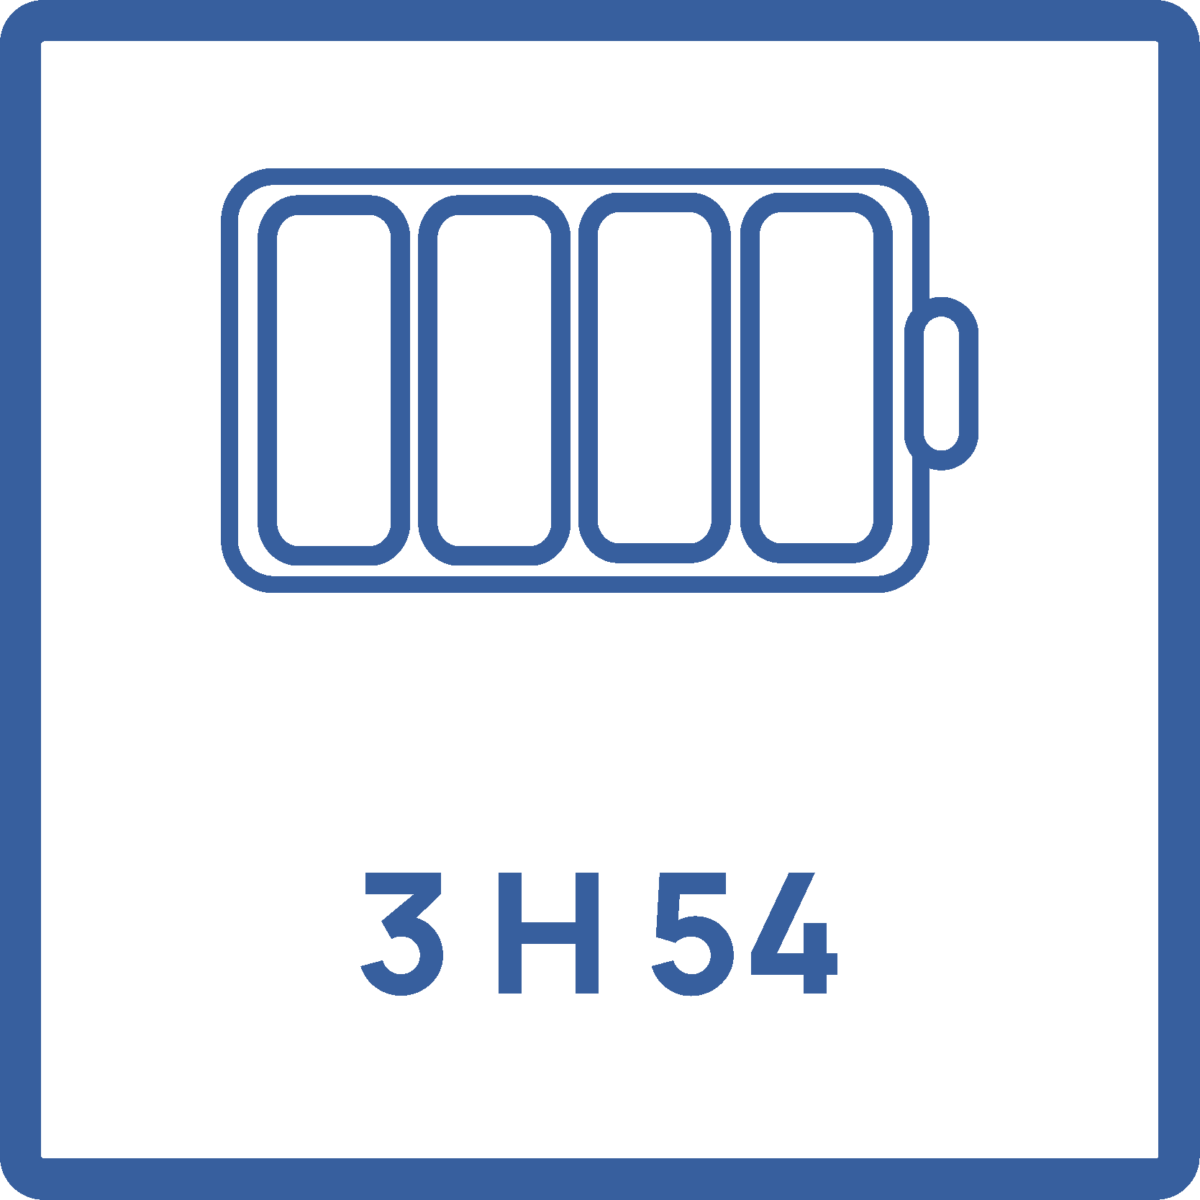 3 H 54